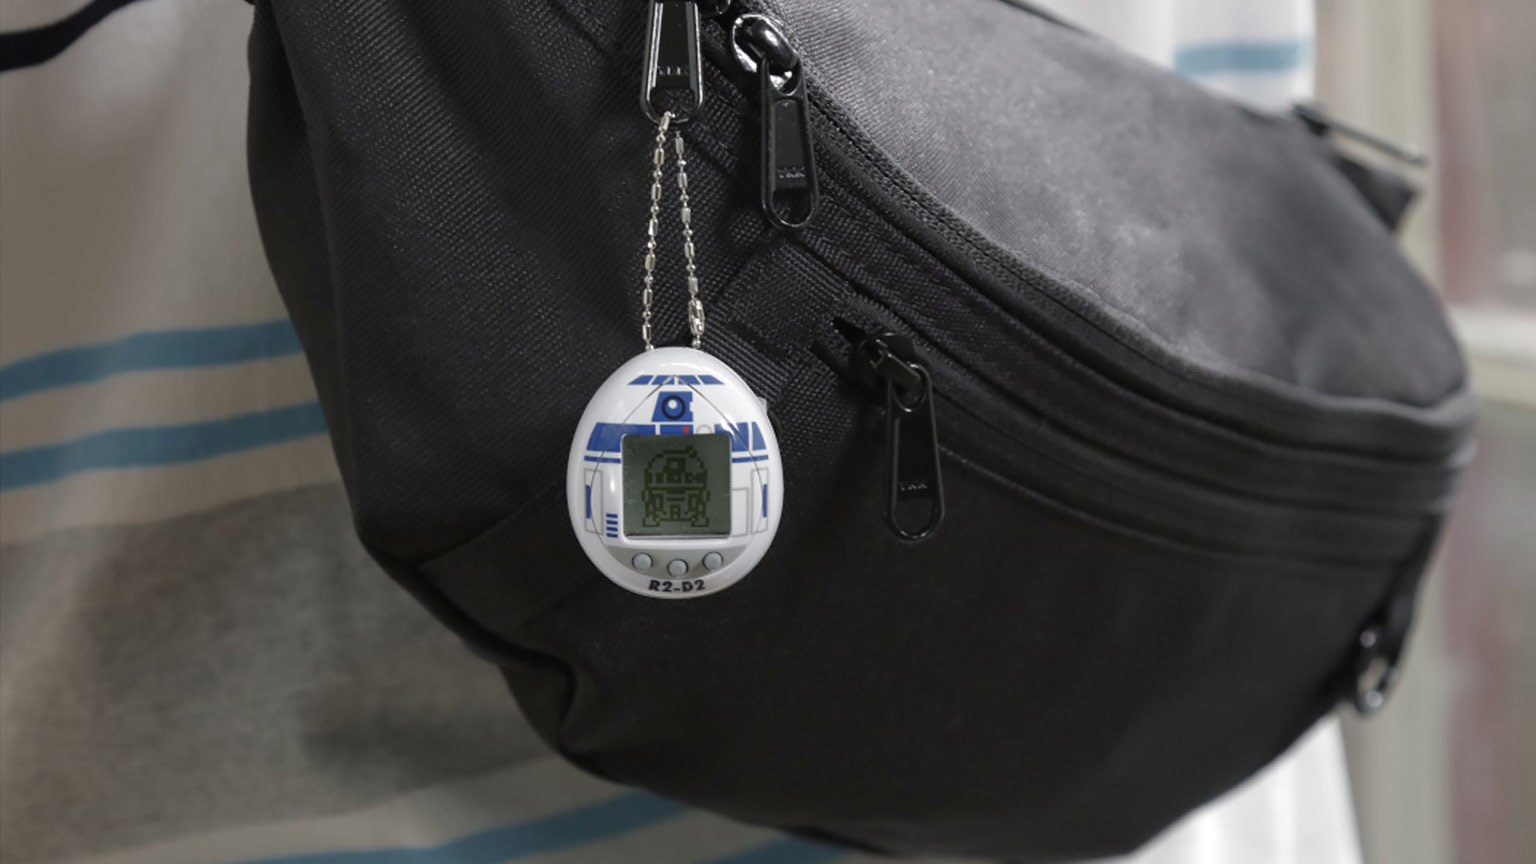 The New Pocket-Sized R2-D2 Tamagotchi is Big Fun